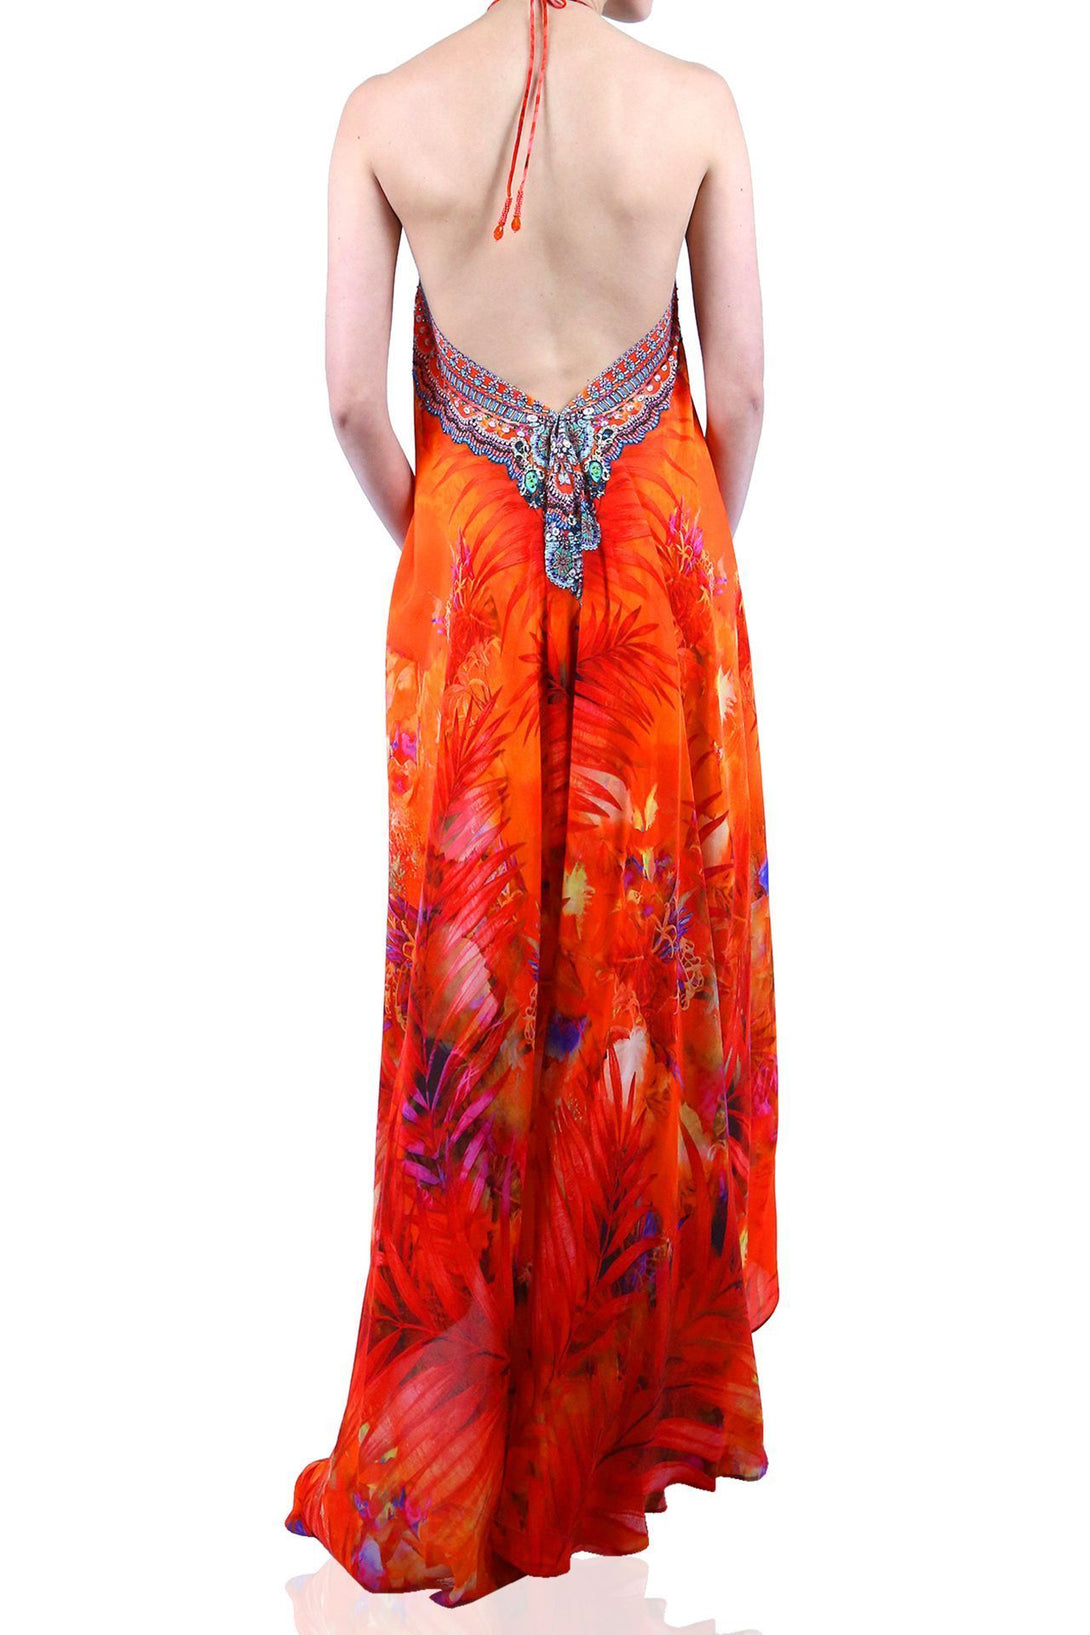  long dress orange, formal dresses for women, Shahida Parides, plunging neckline cocktail dress,